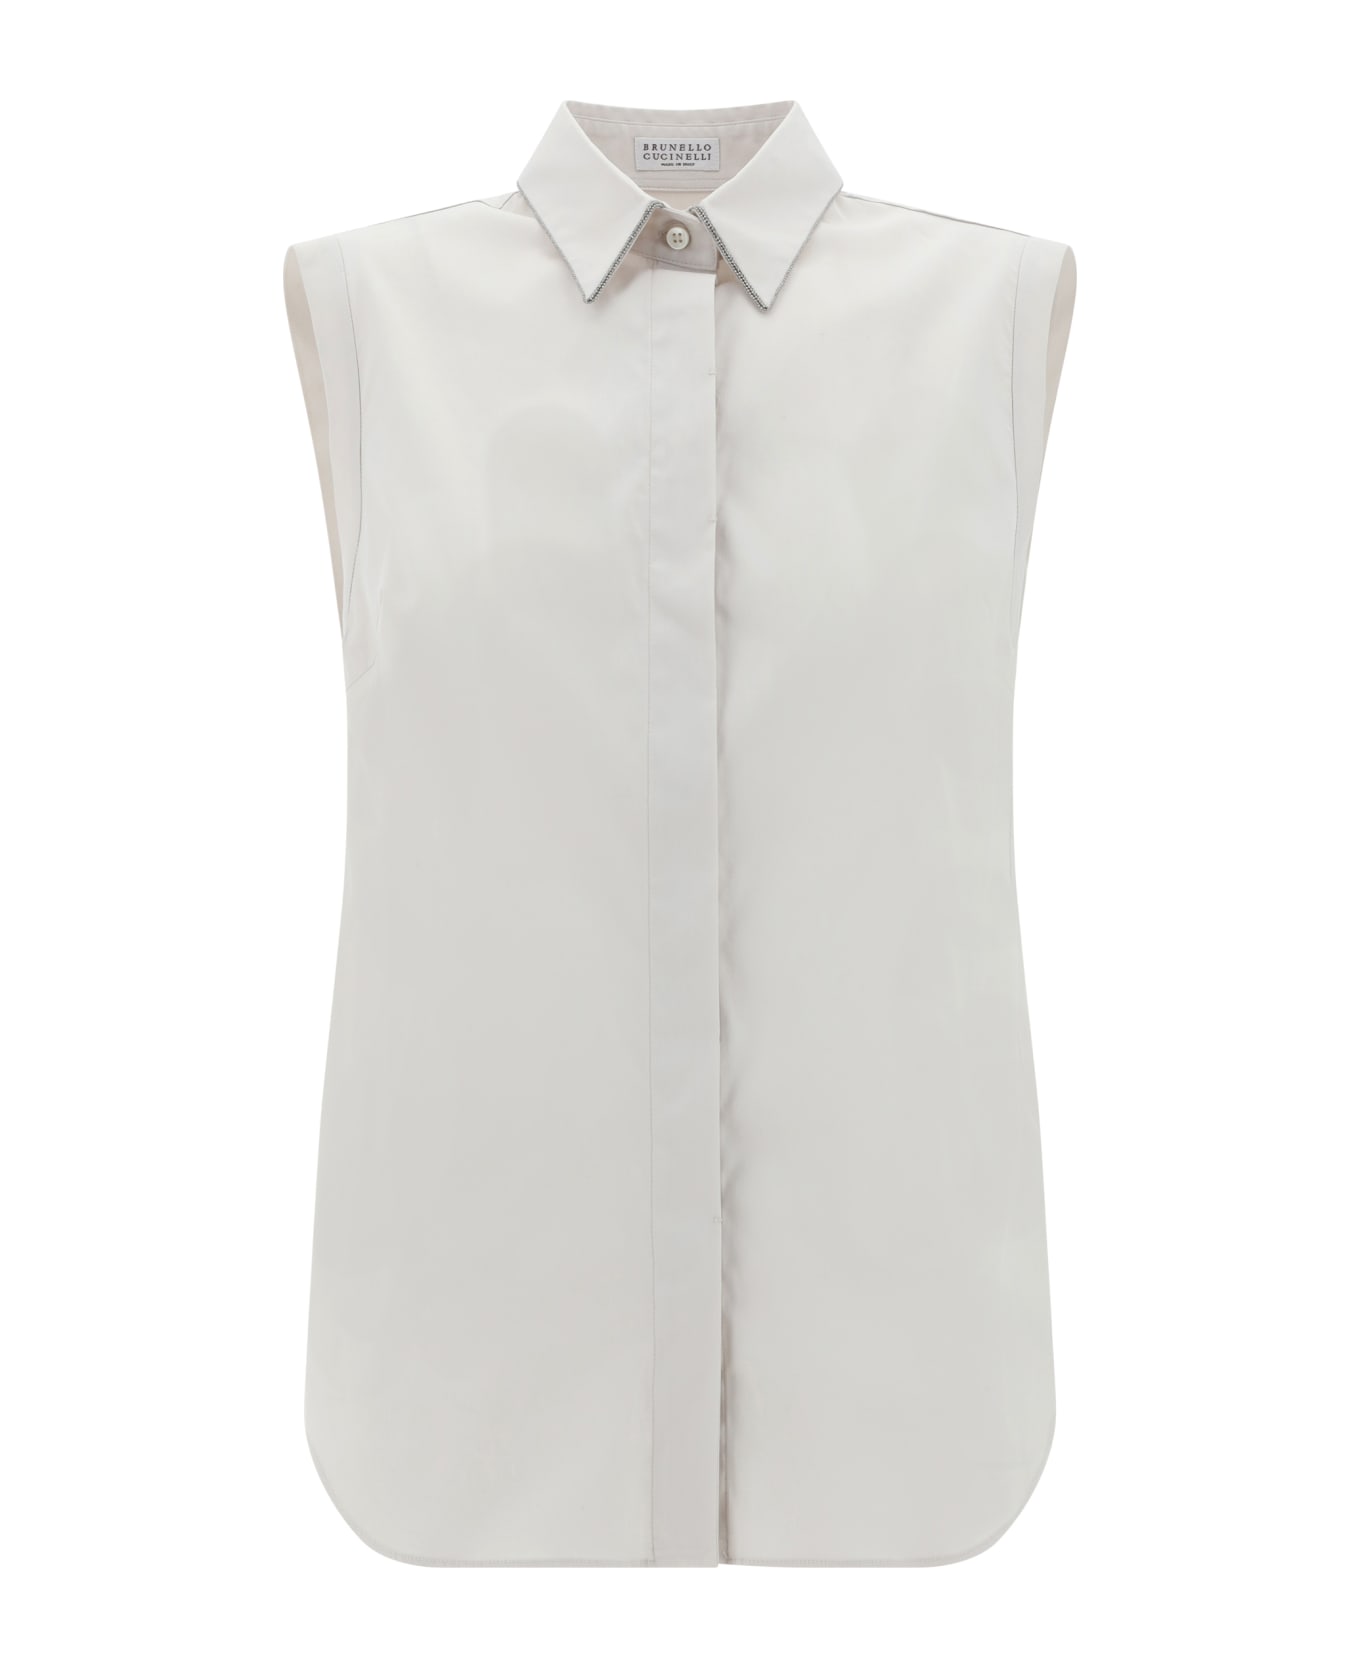 Brunello Cucinelli Sleeveless Shirt With Monili Details - White シャツ